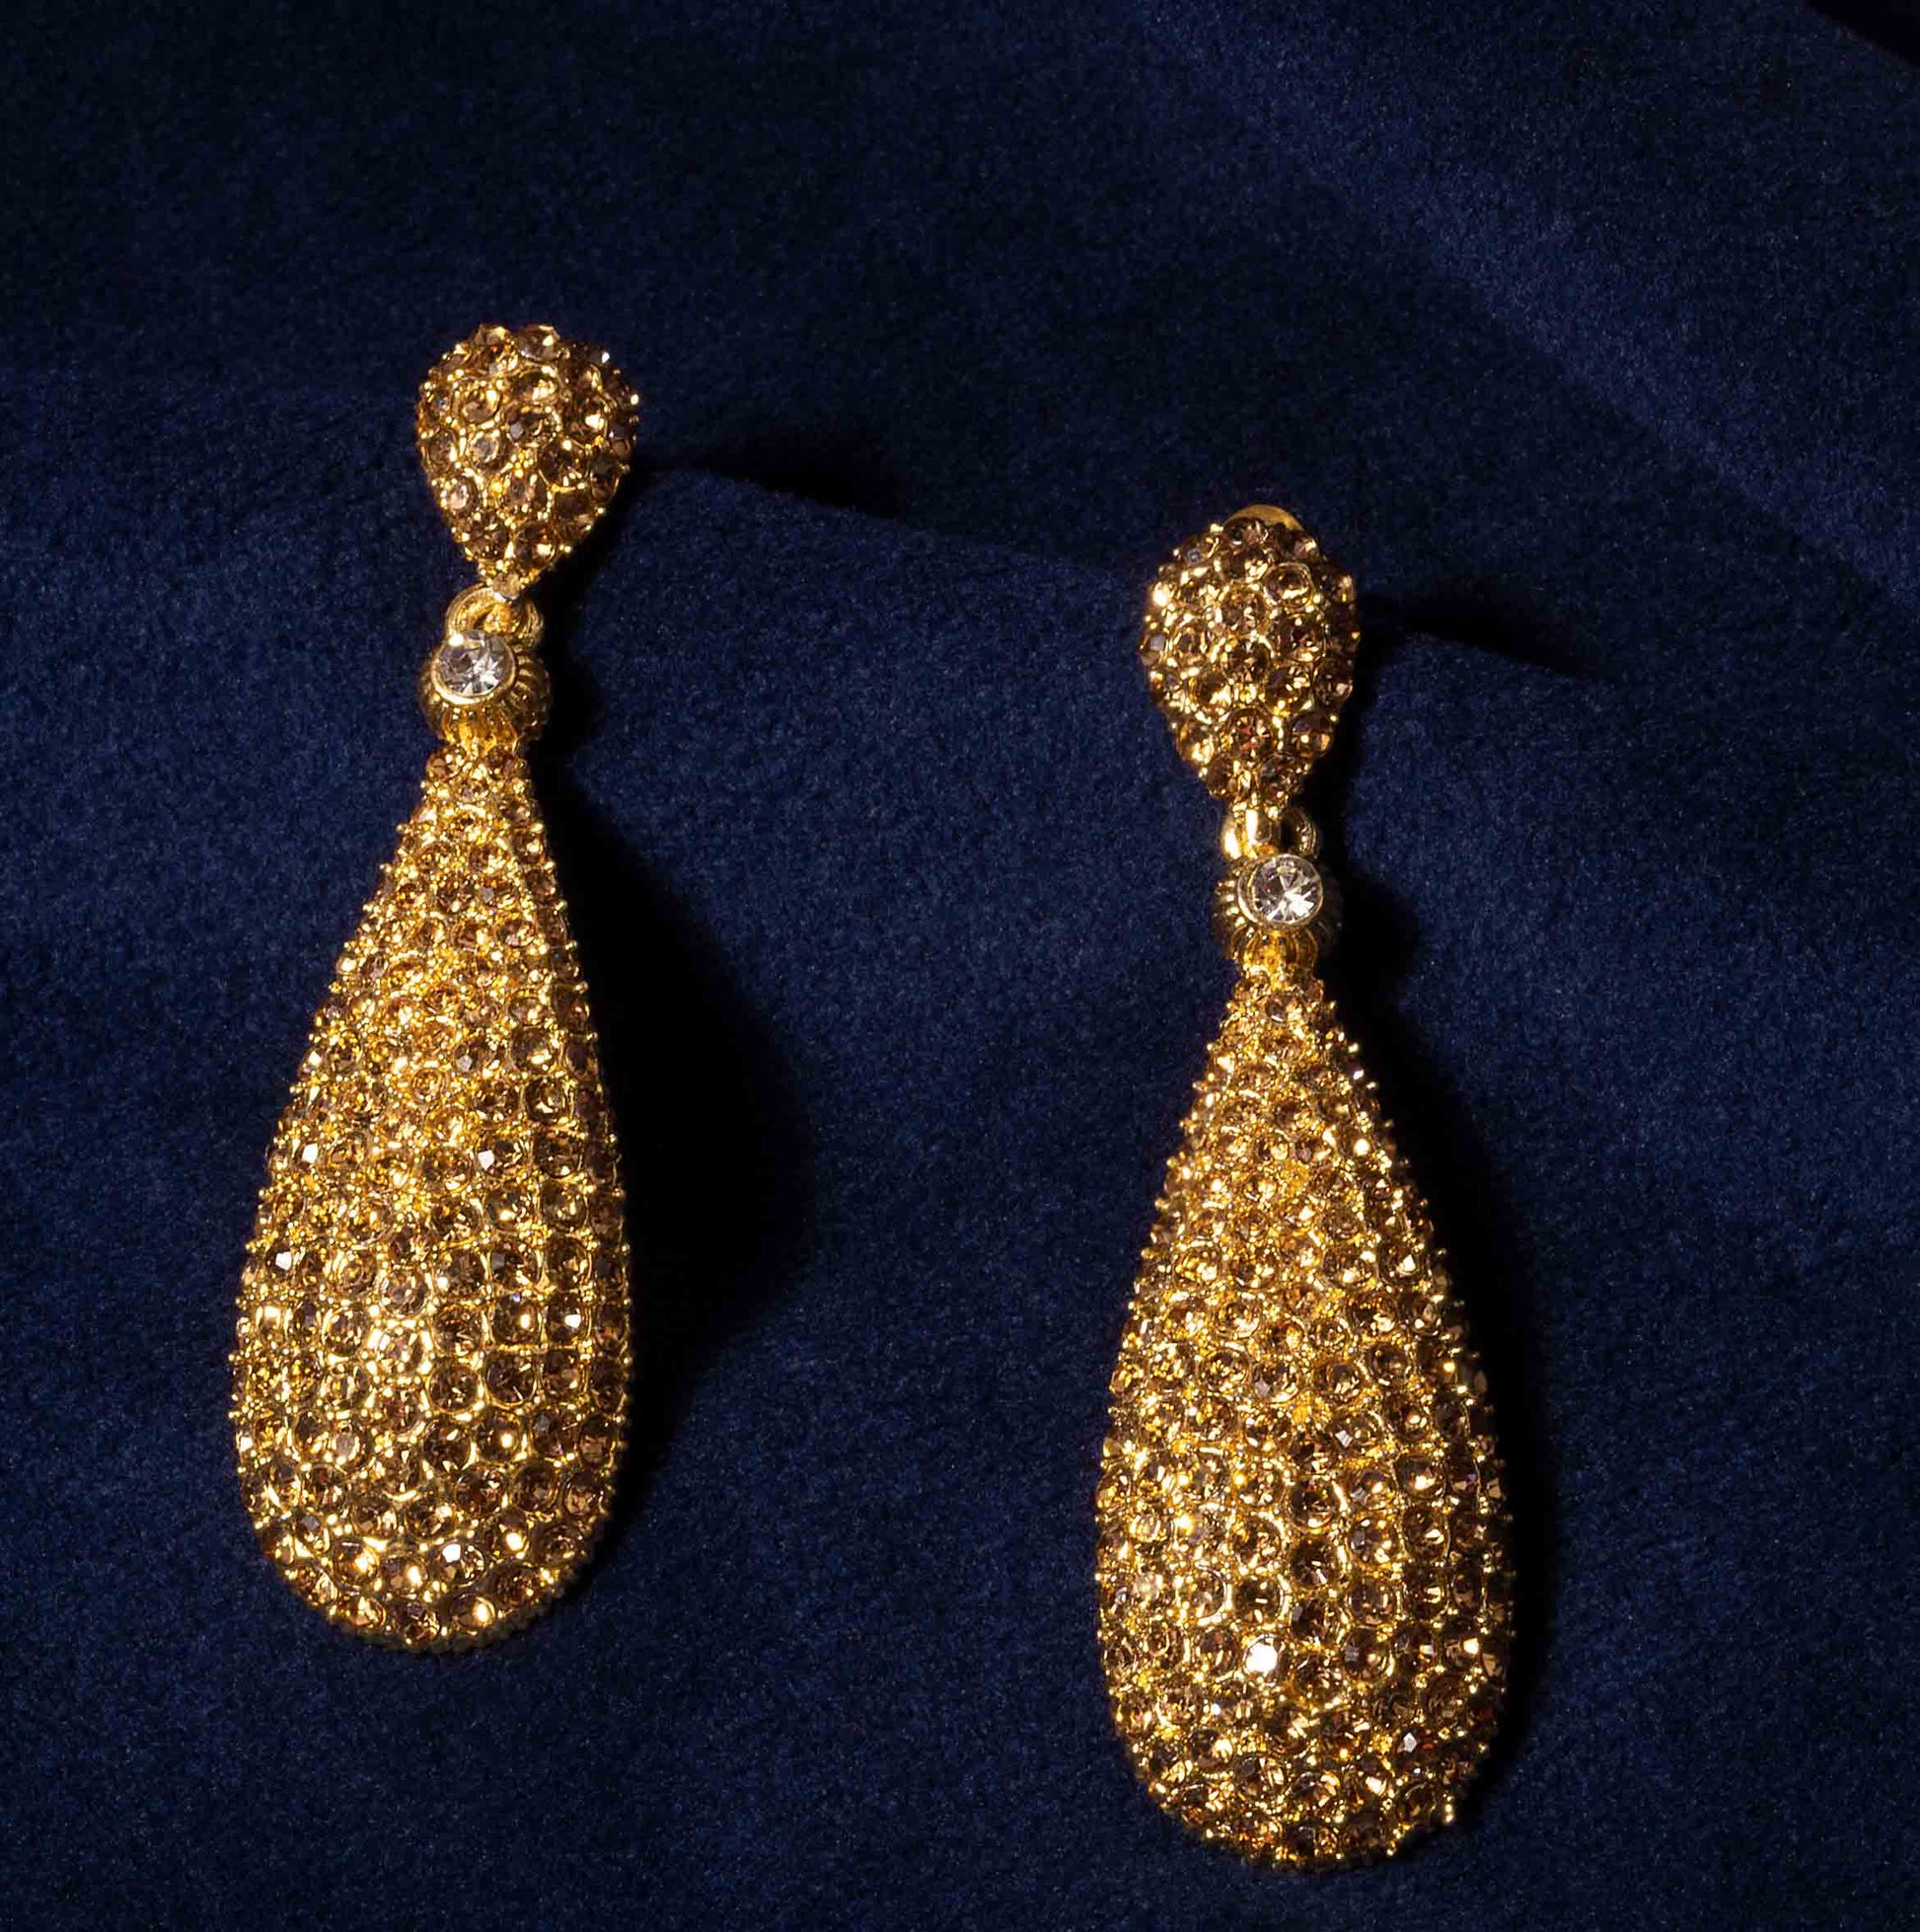 Moonstruck Golden Crystal Diamond Drop And Dangle Fashion Earrings For Women - www.MoonstruckINC.com